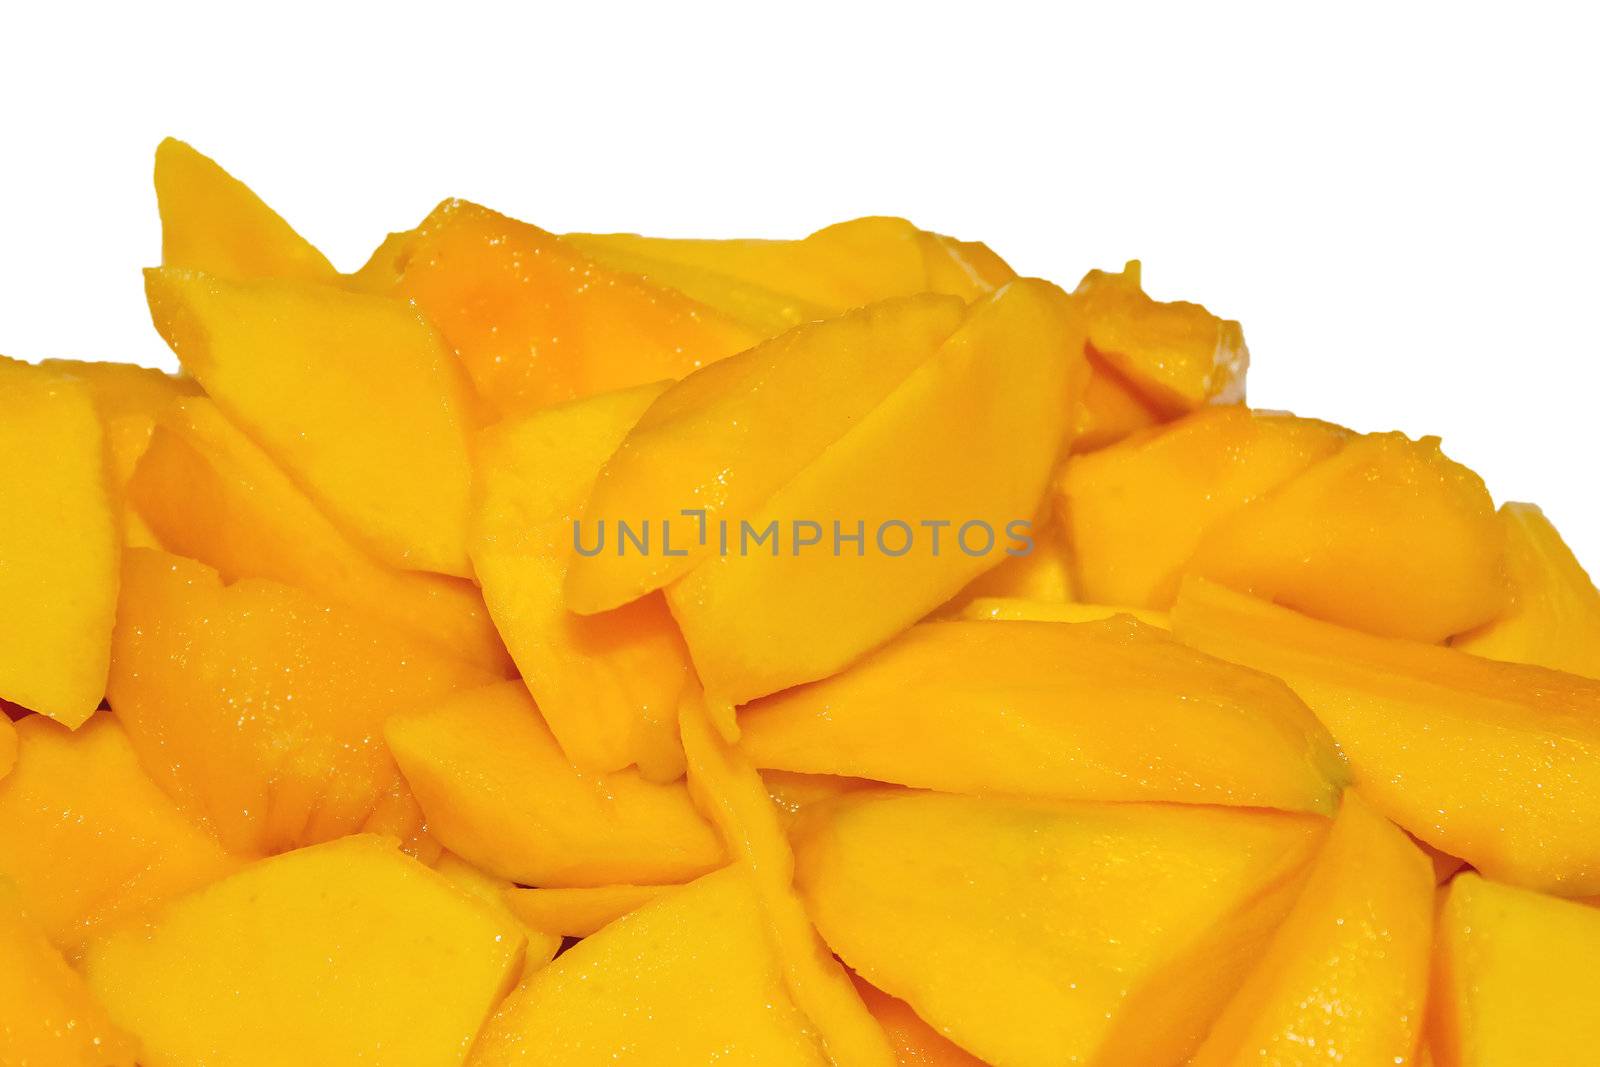 The sliced mango on a white background